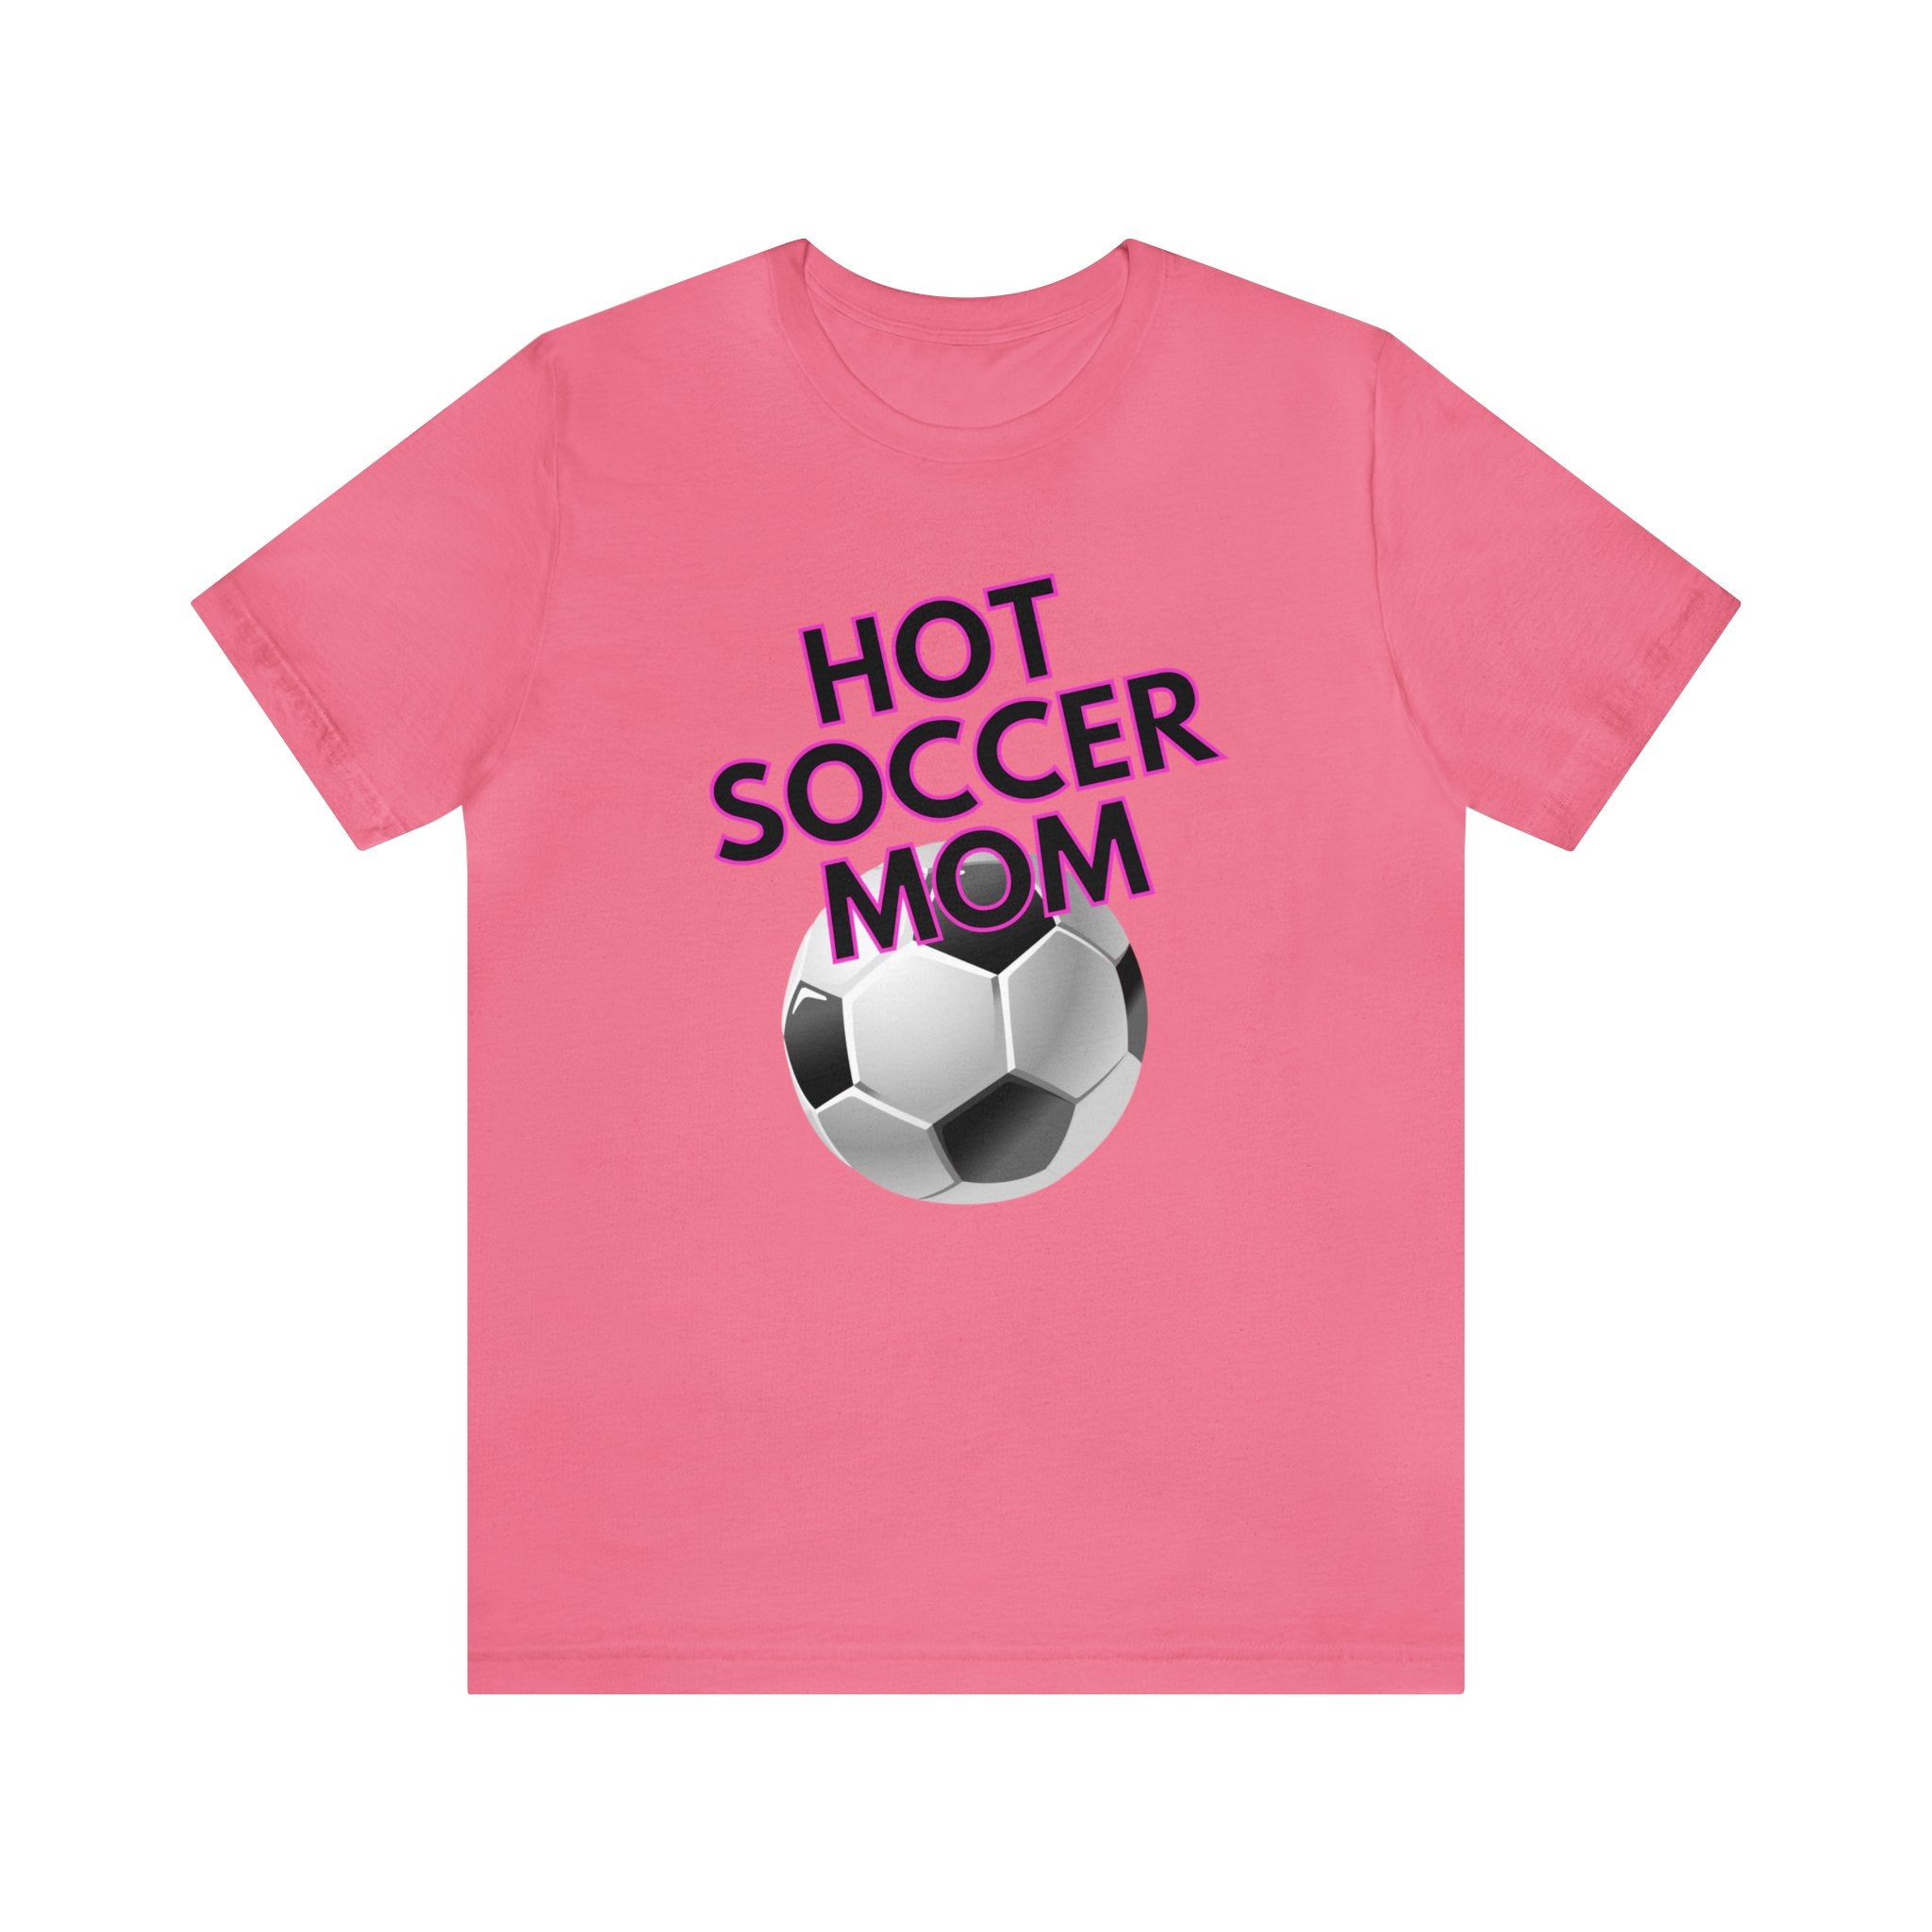 aga yilmaz recommends Super Hot Soccer Moms